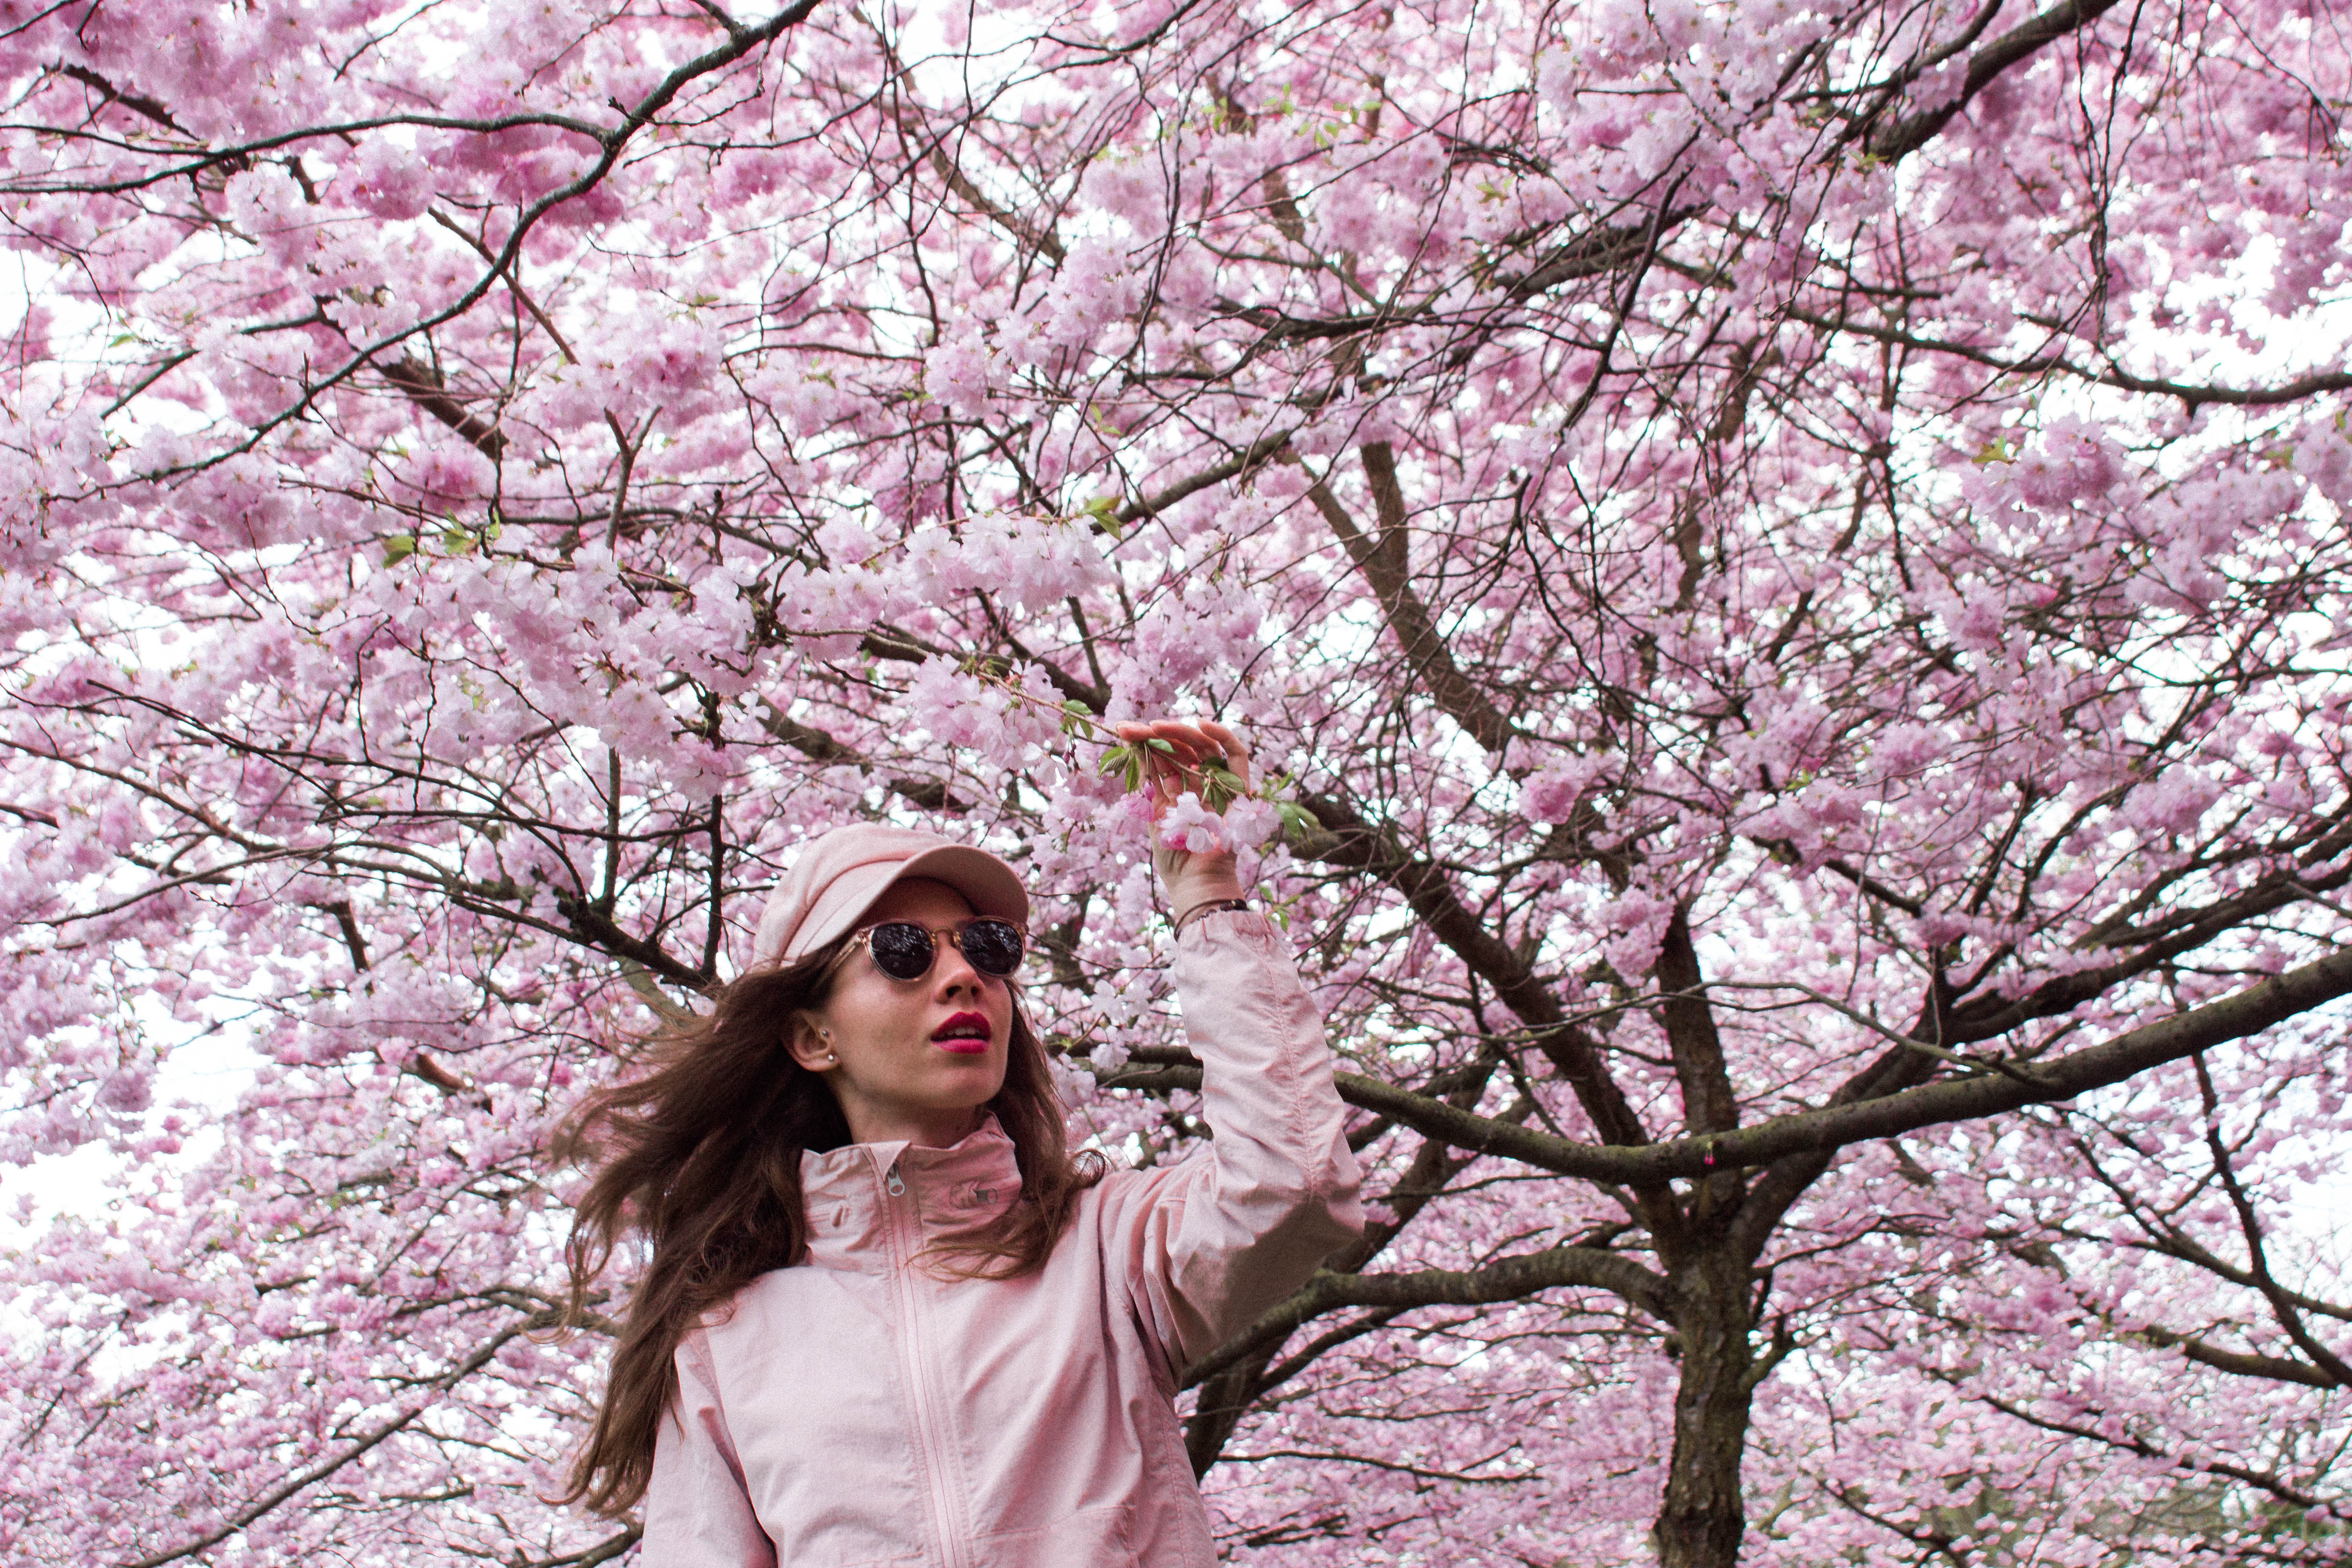 Malvina Dunder cheery blossoms sakura, travel and mindful living. Podróże świadome życie, kawiaty wiśni